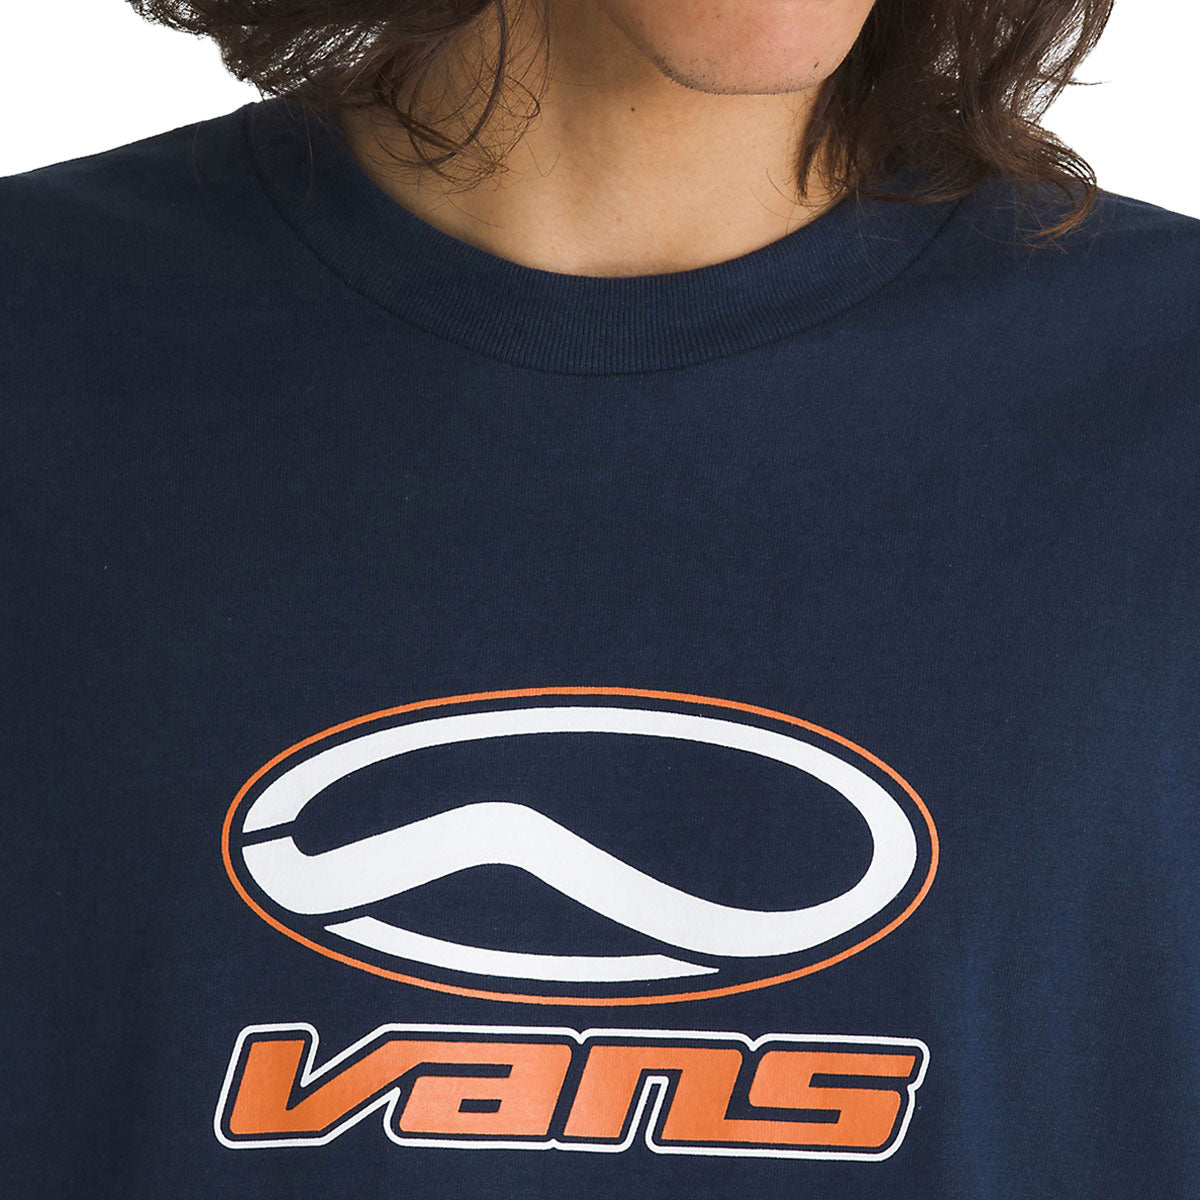 Vans Off The Wall II Loose Skate Classics T-Shirt - Dress Blues image 3